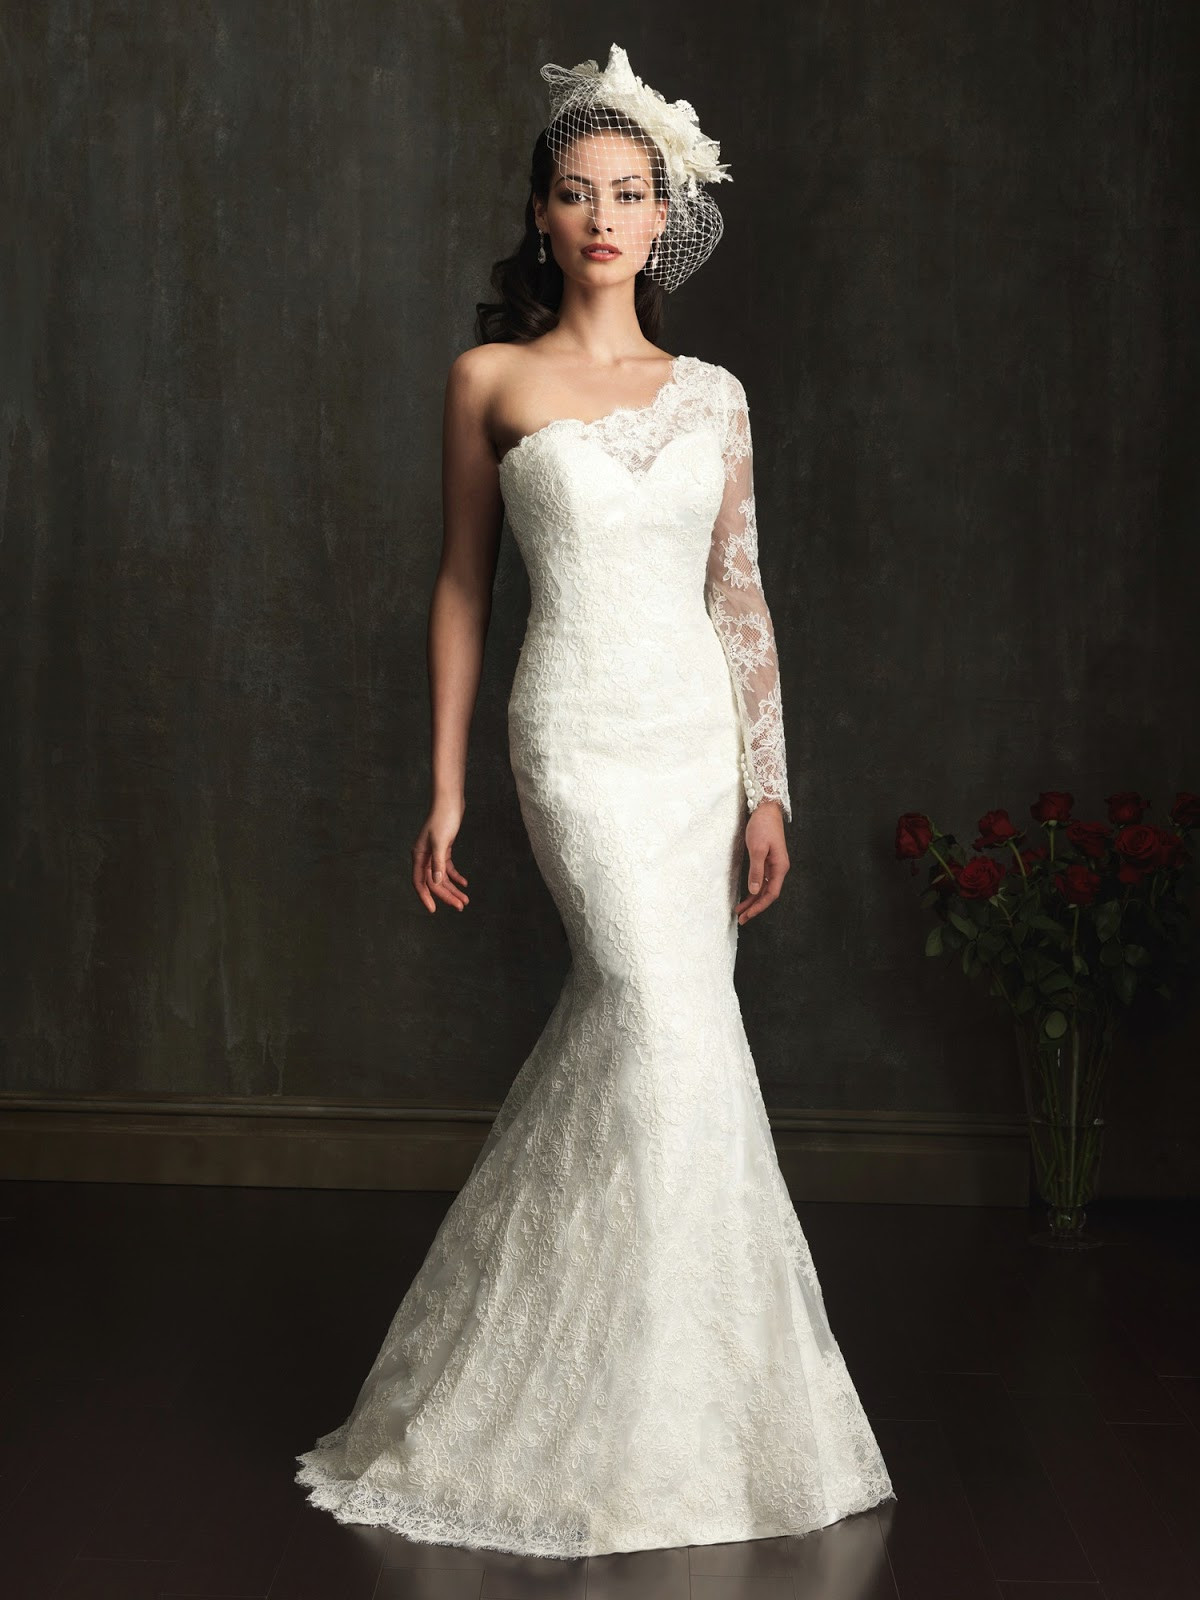 Form Fitting Wedding Dress
 DressyBridal Allure Wedding Dresses Fall 2013 Collection